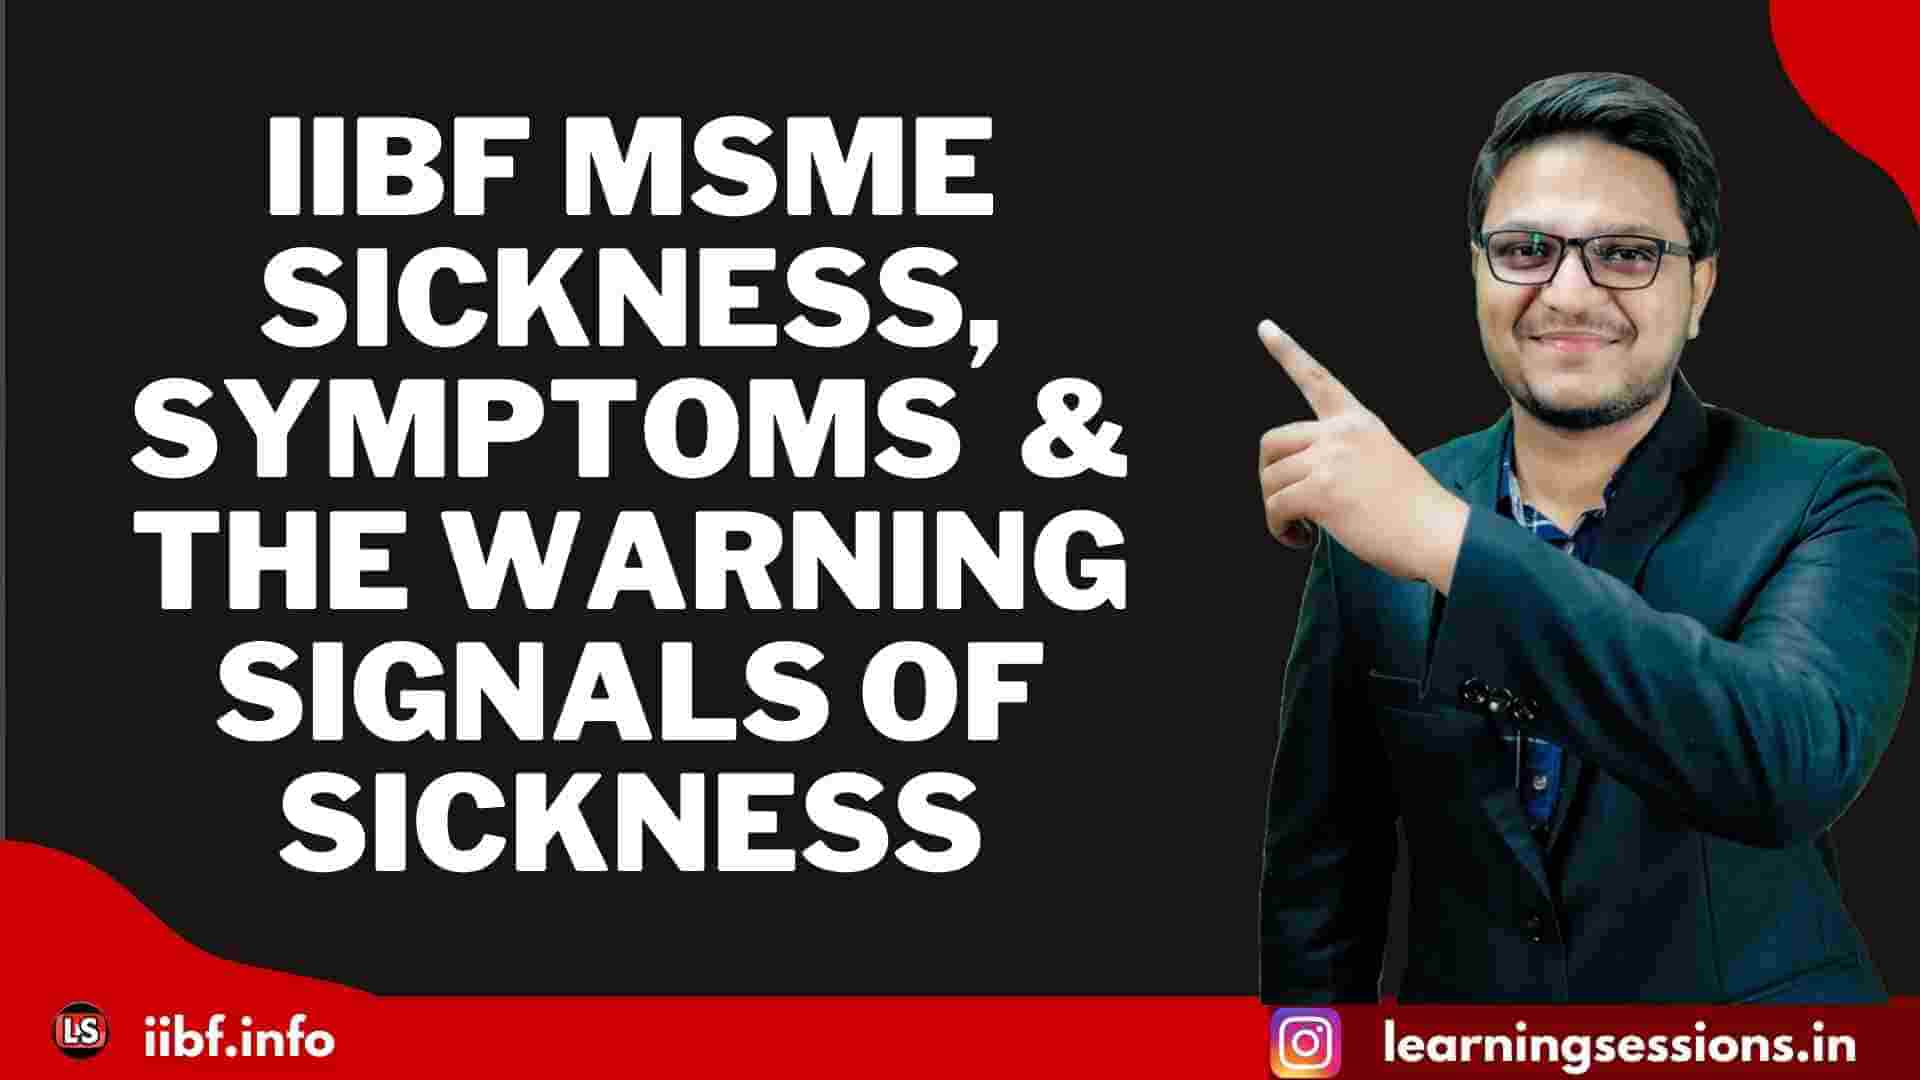 IIBF MSME | SICKNESS, SYMPTOMS & THE WARNING SIGNALS OF SICKNESS